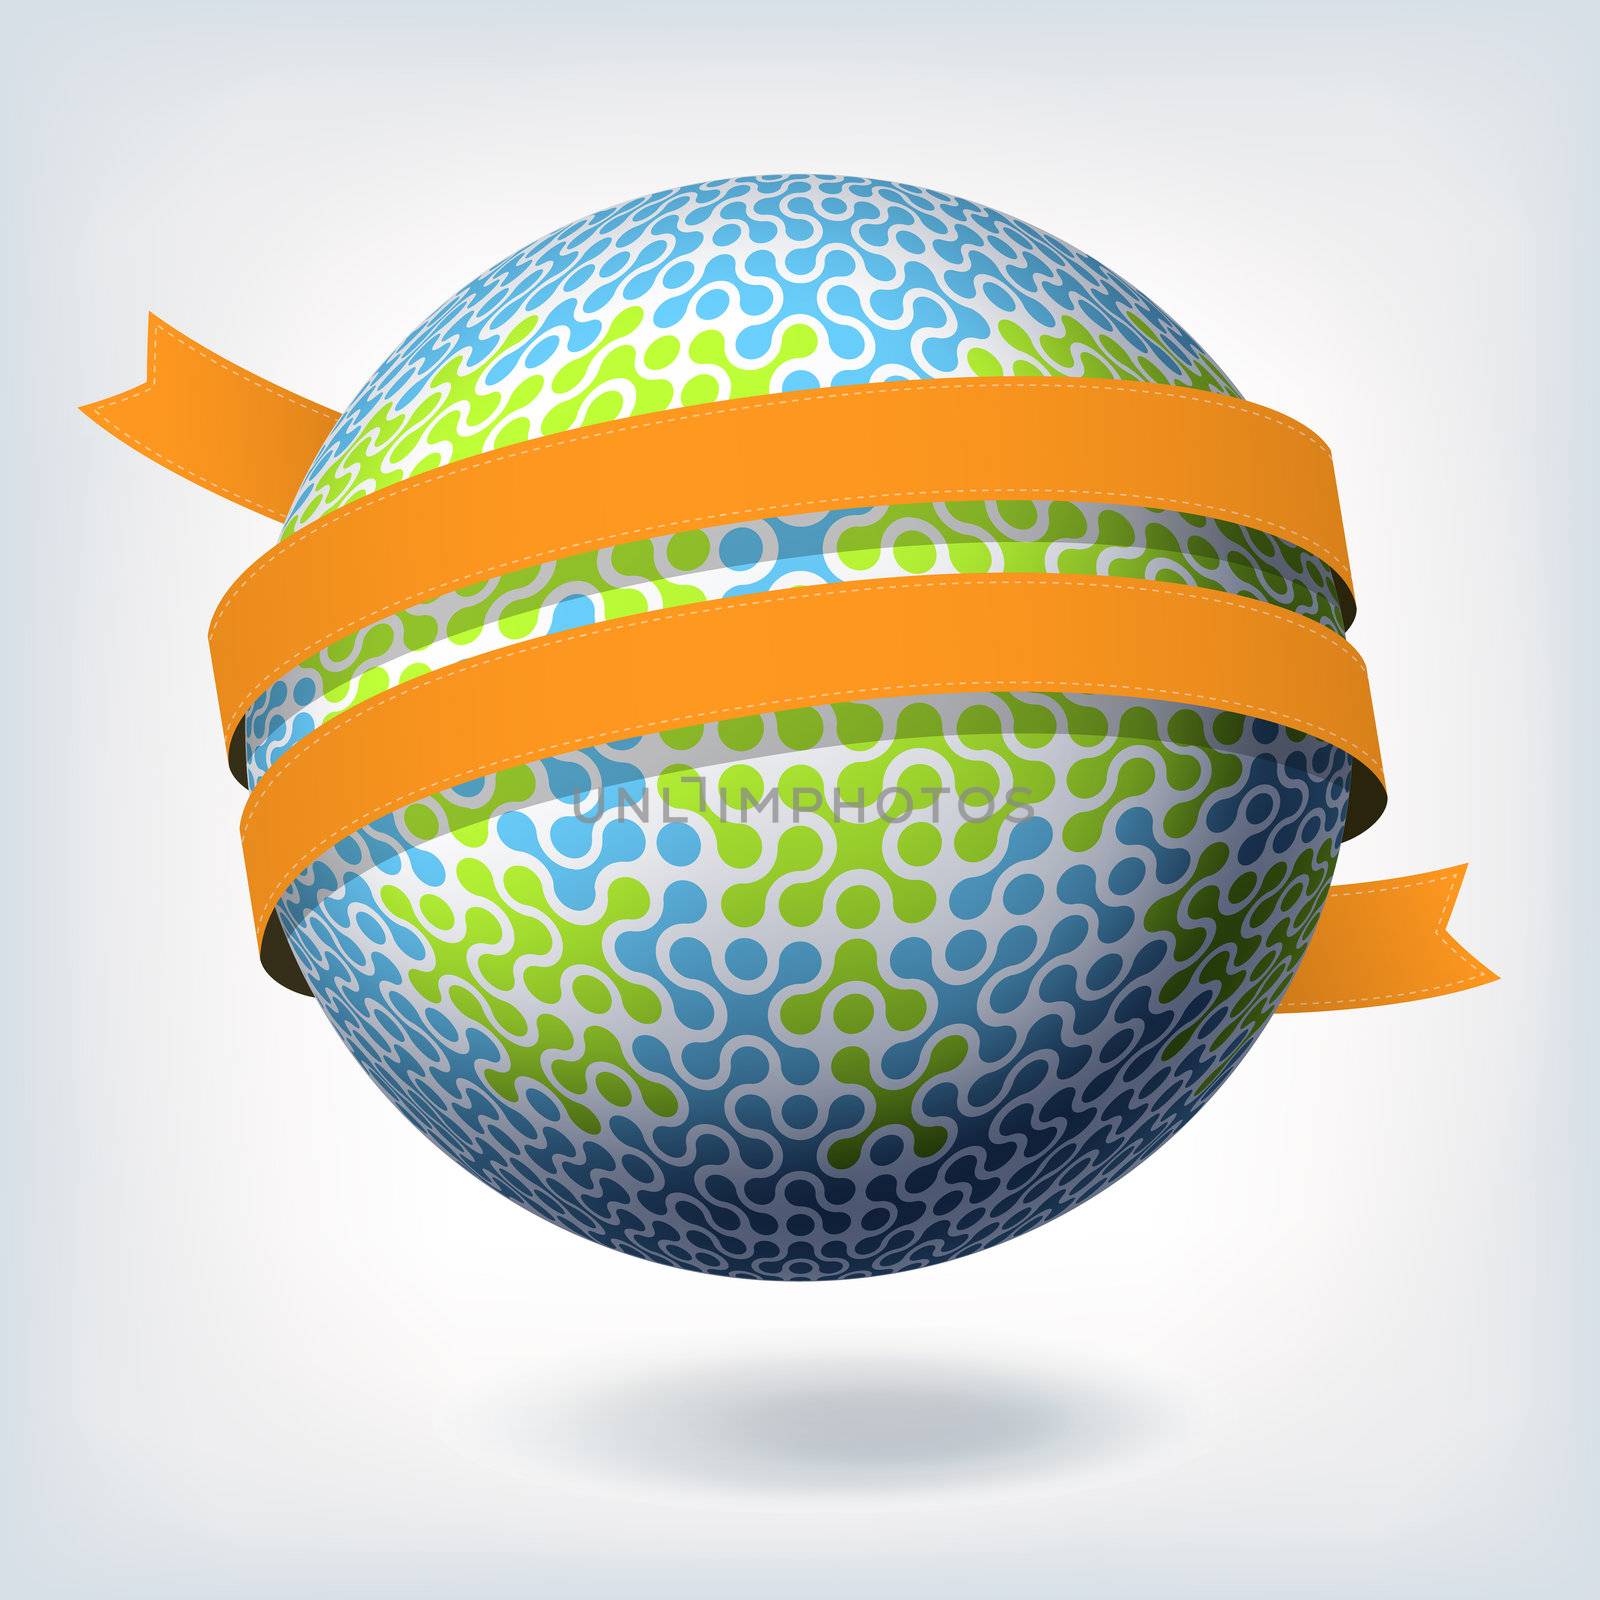 Abstract globe symbol with orange ribbon. Vector illustration, E by pashabo